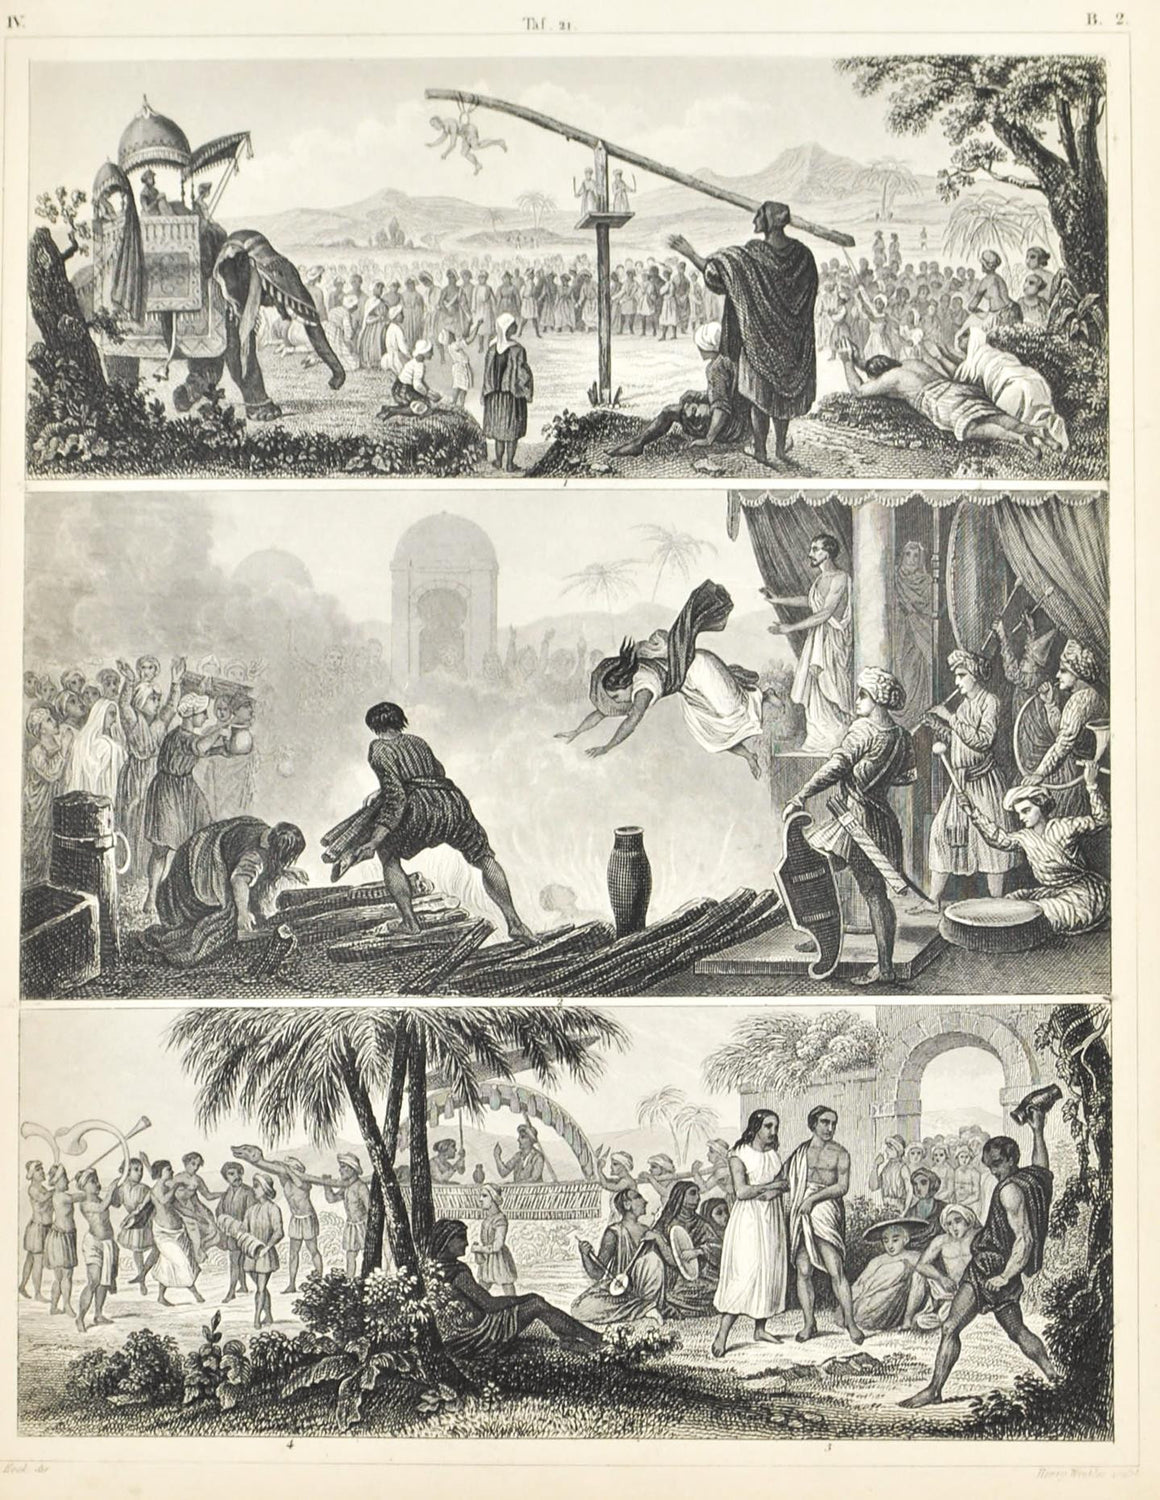 Penitent Hindu Fanatic Indian Gypsies Wedding Antique Print 1857